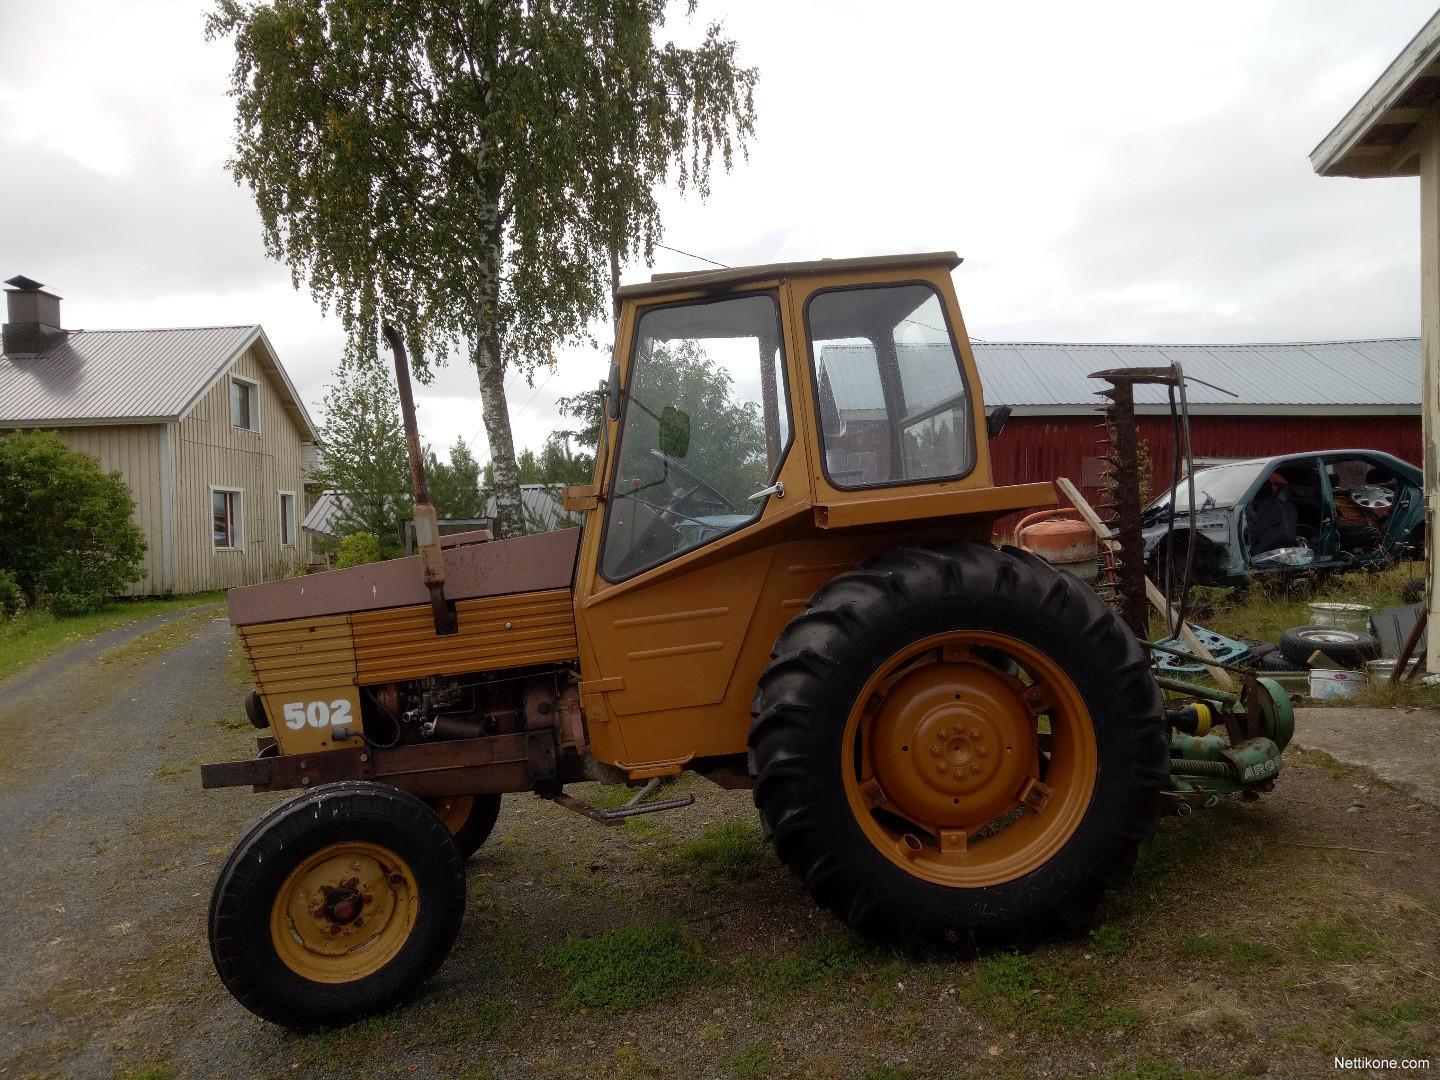 Valmet 502 tractors, 1977 - Nettikone